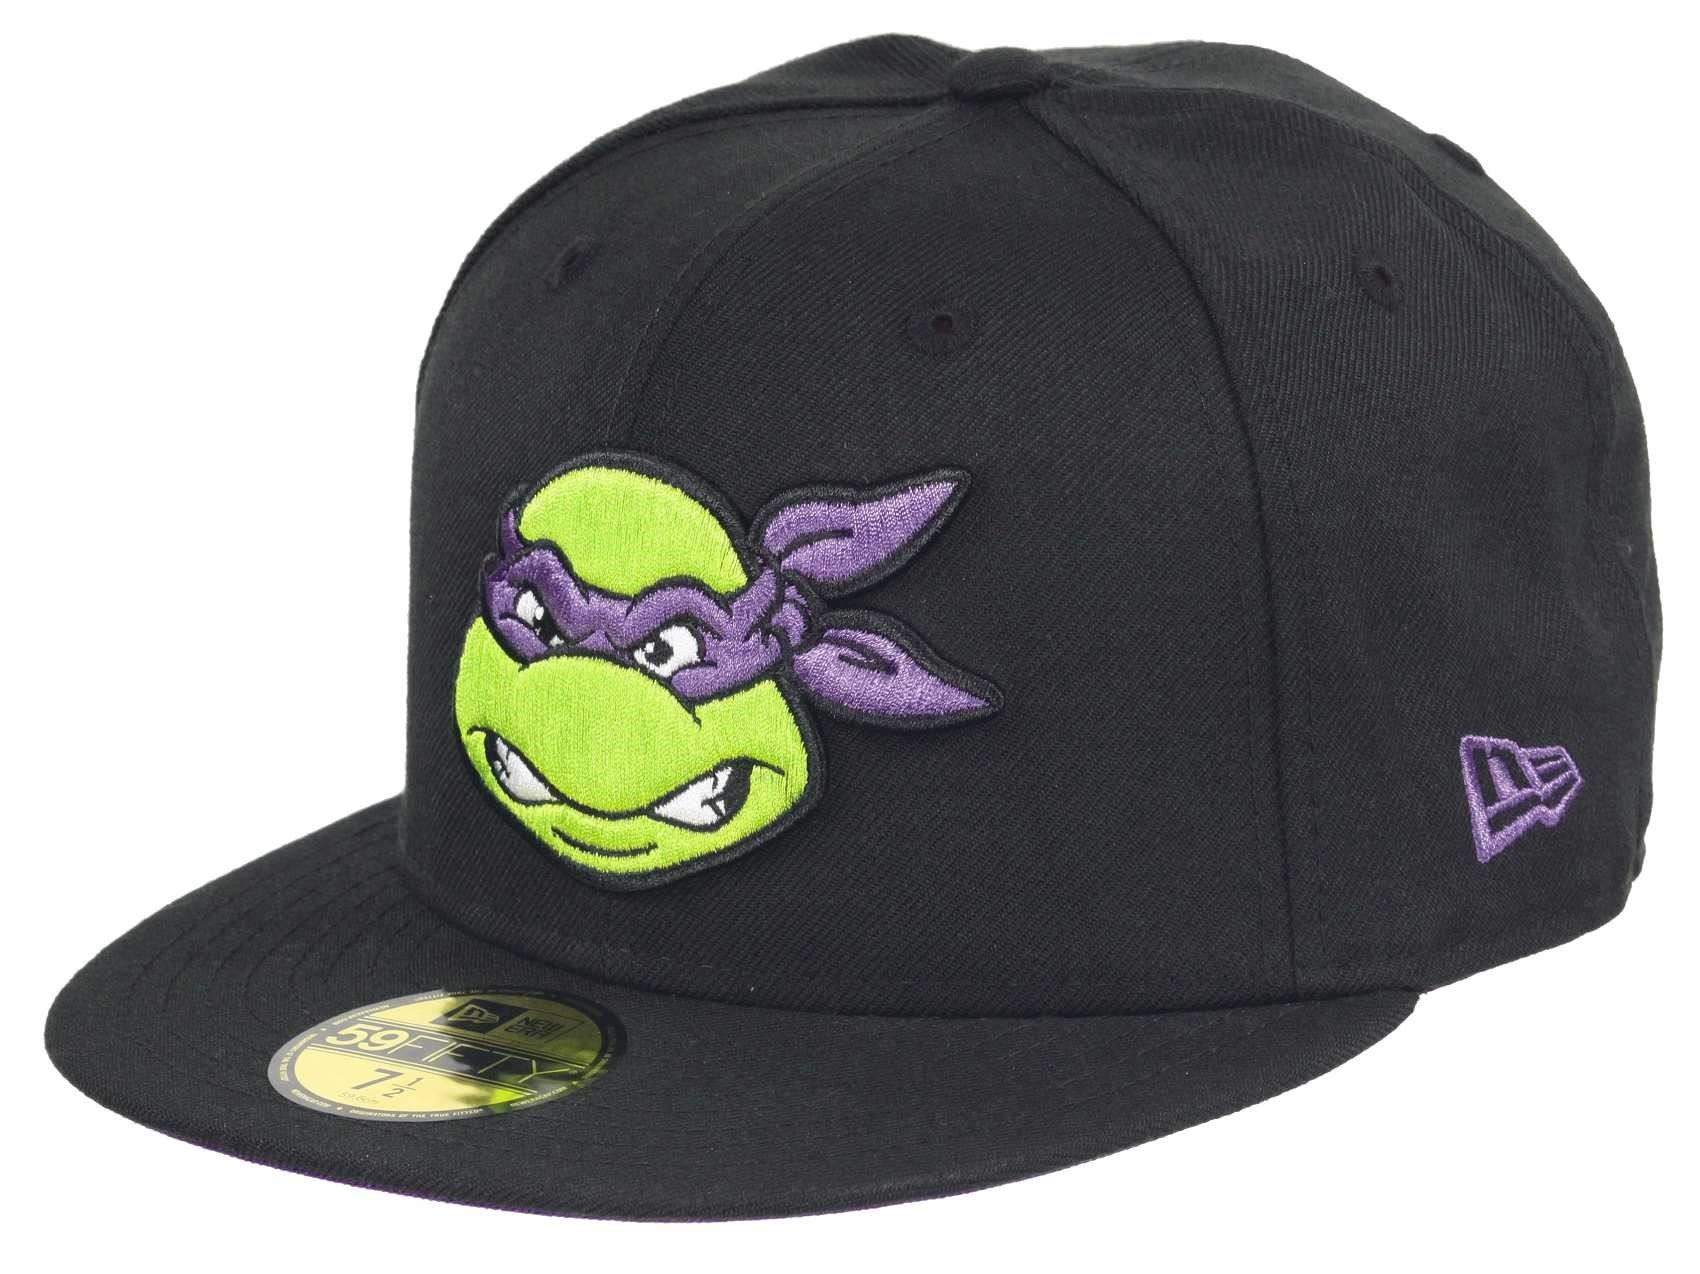 Donatello Ninja Turtles TMNT Edition 9Fifty Snapback Cap New Era